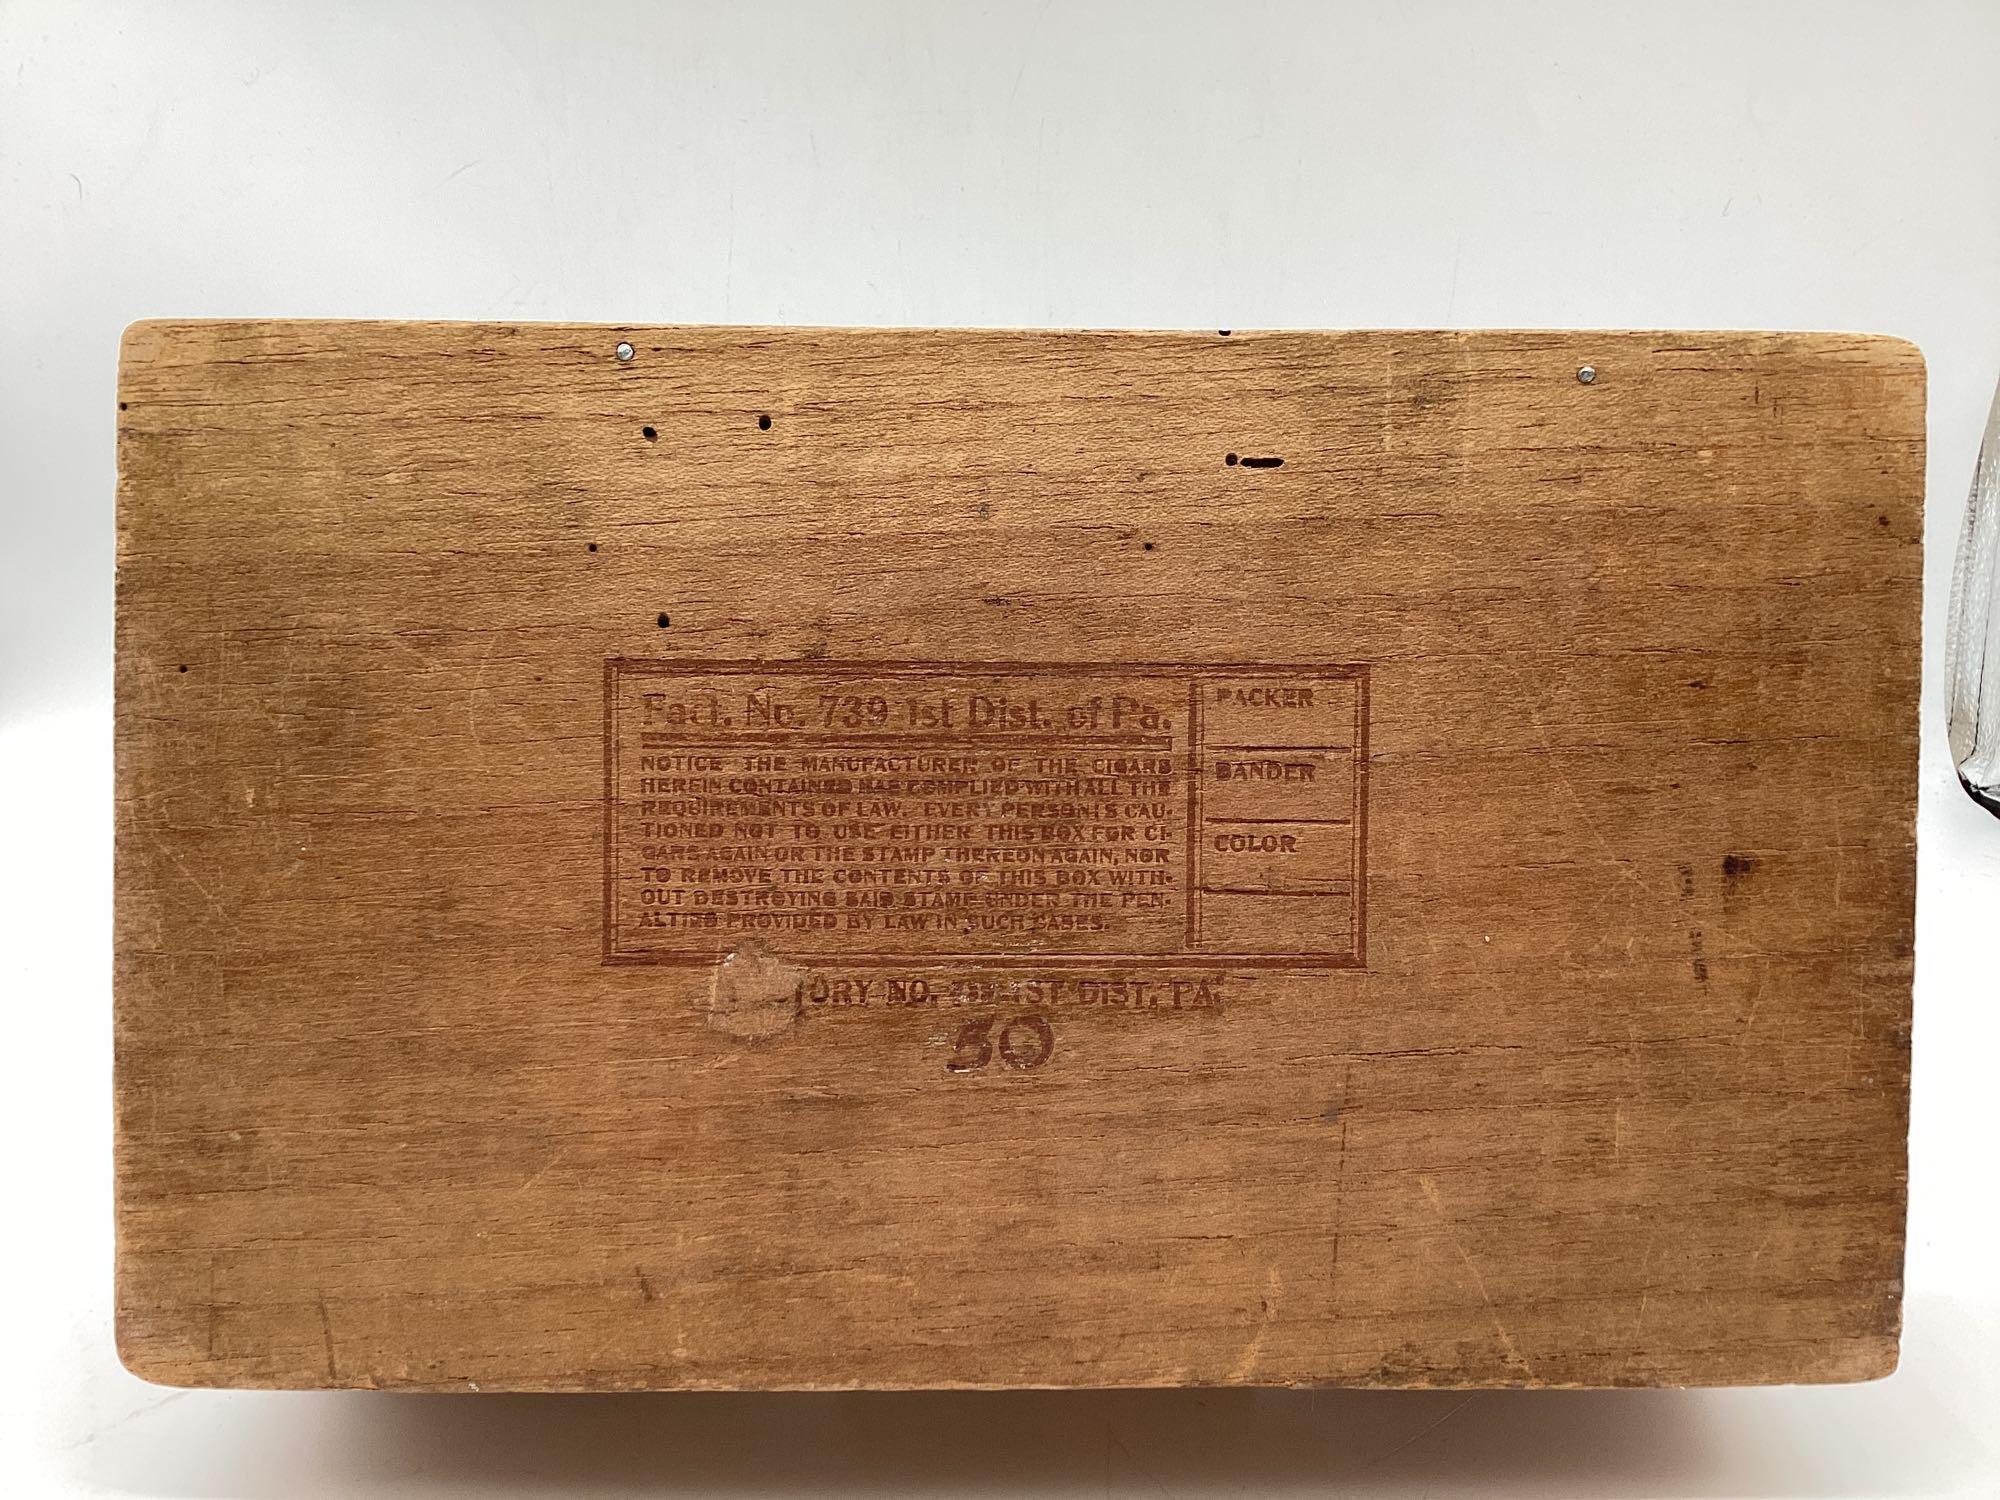 Two Robert Fulton 5 cent Cigar Boxes Tulsa, OK